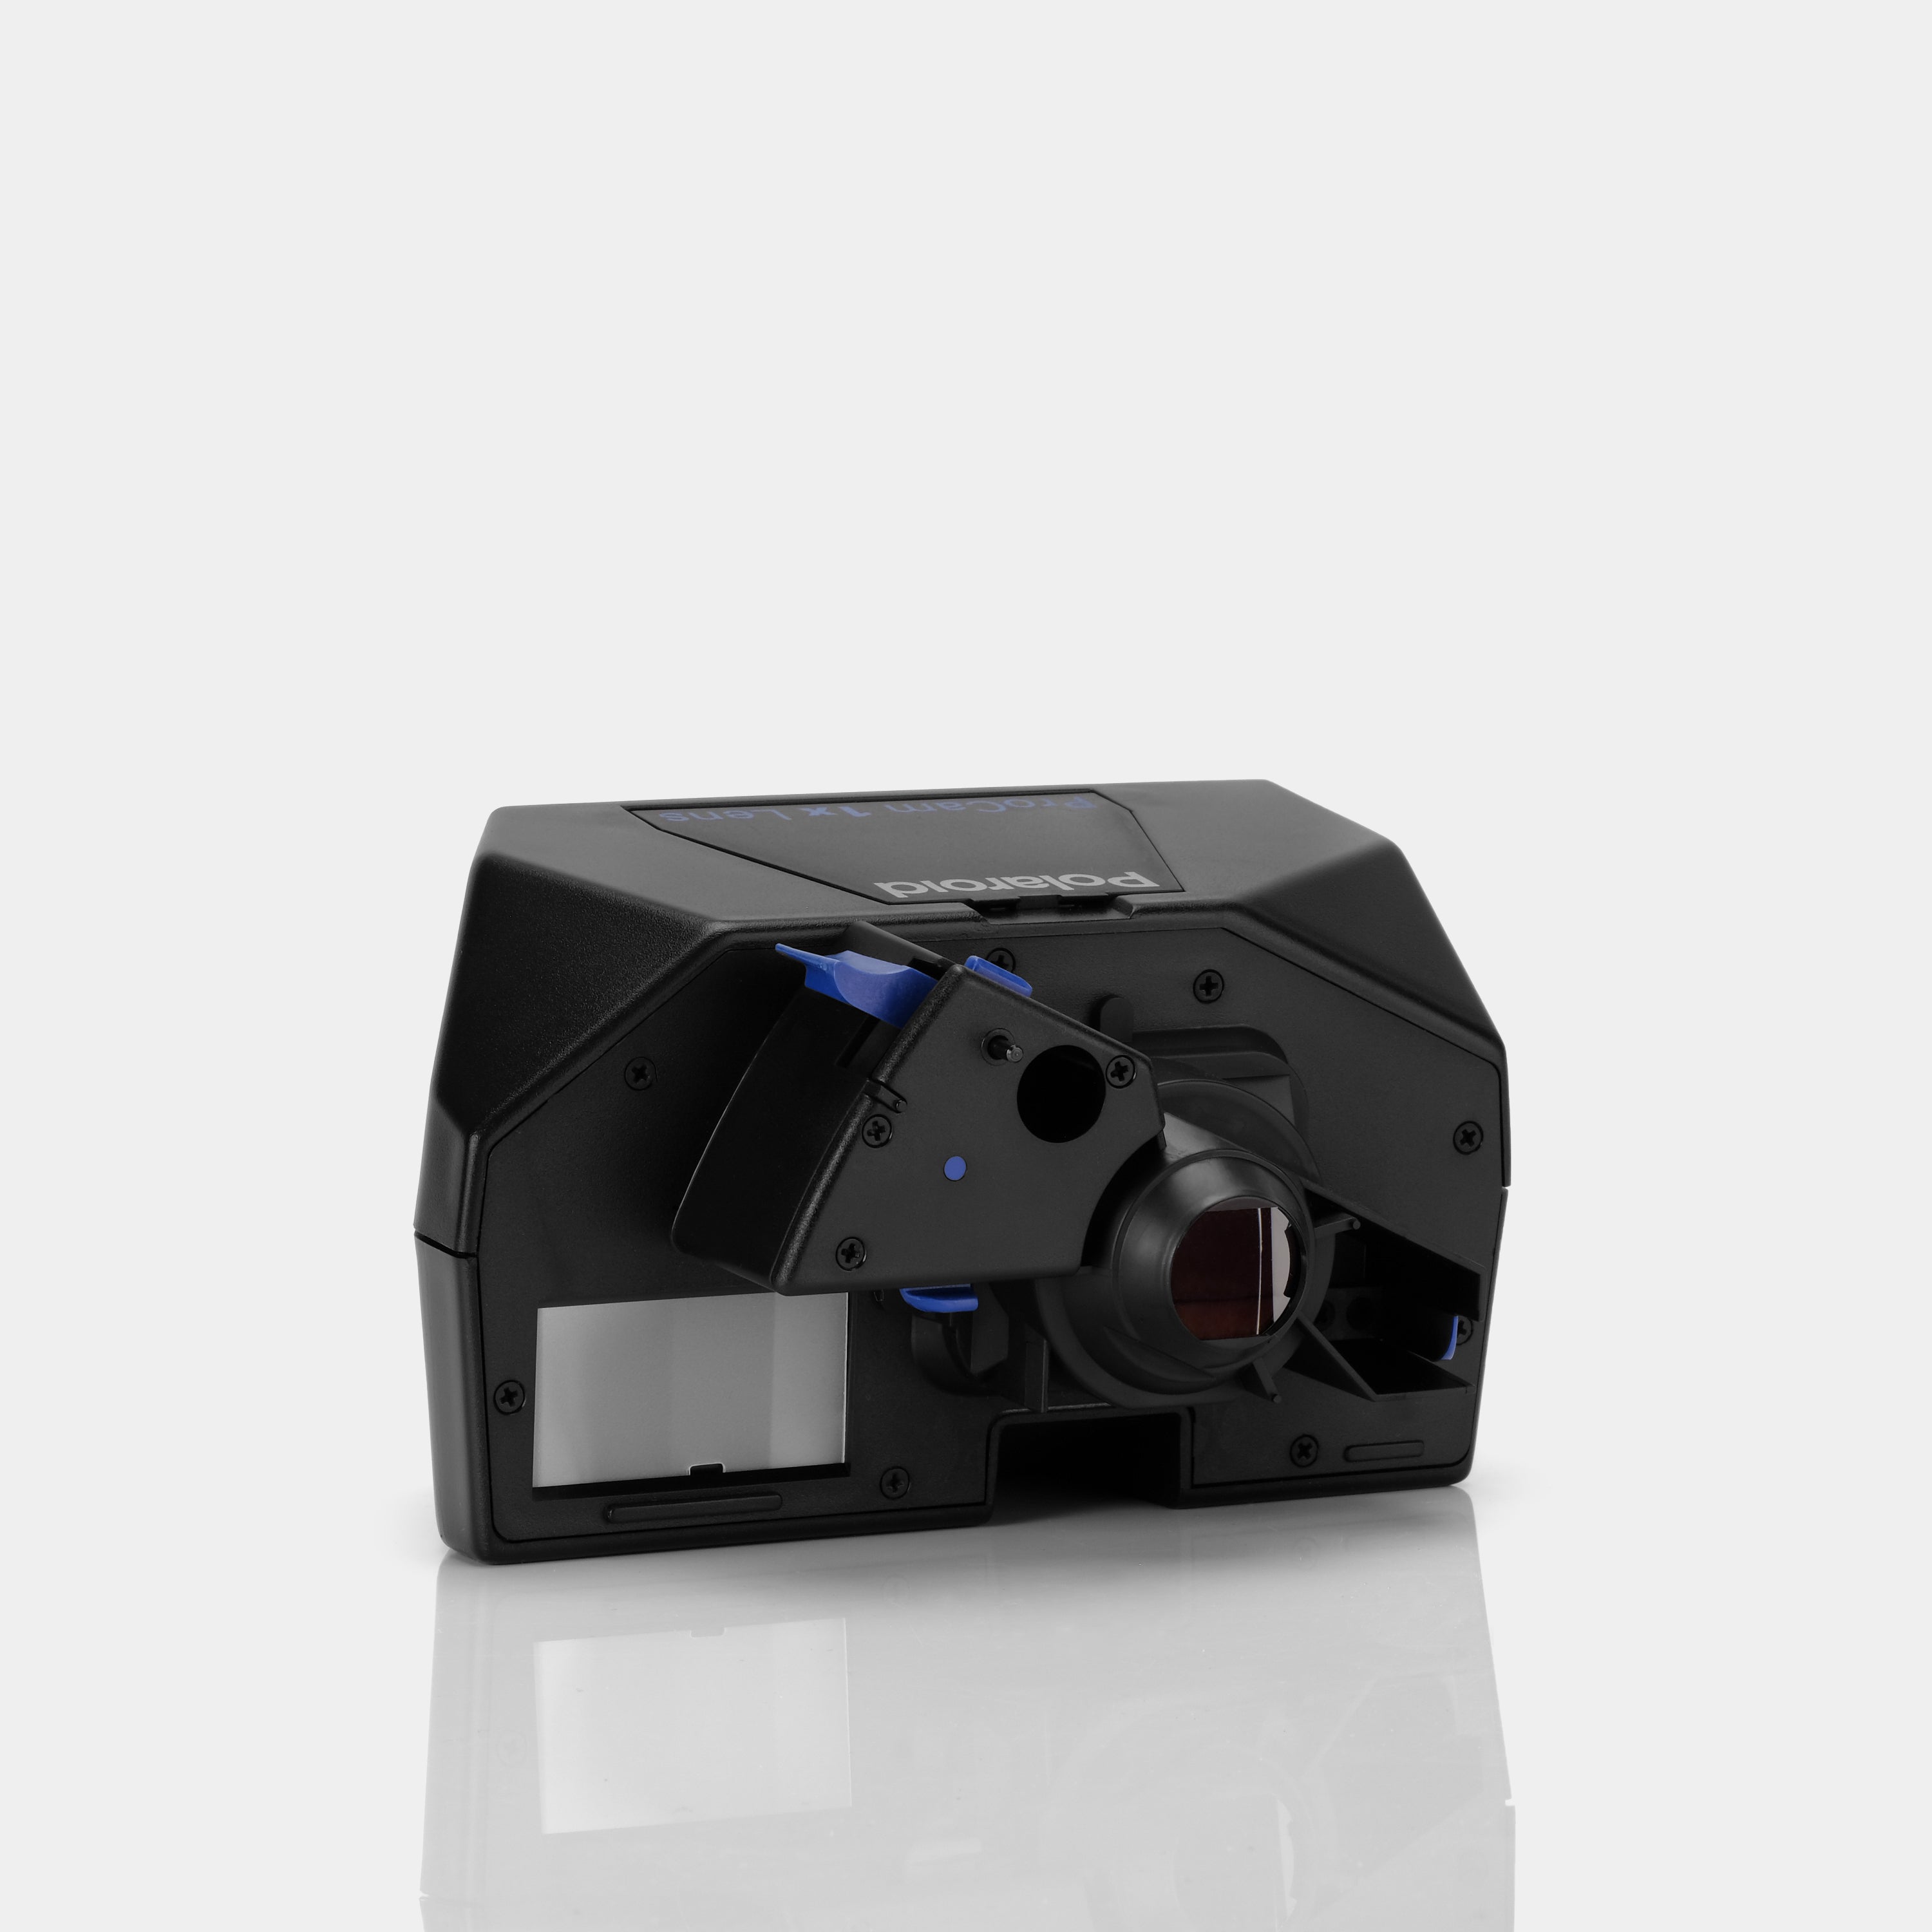 Polaroid Pro Cam 1X Lens Attachment